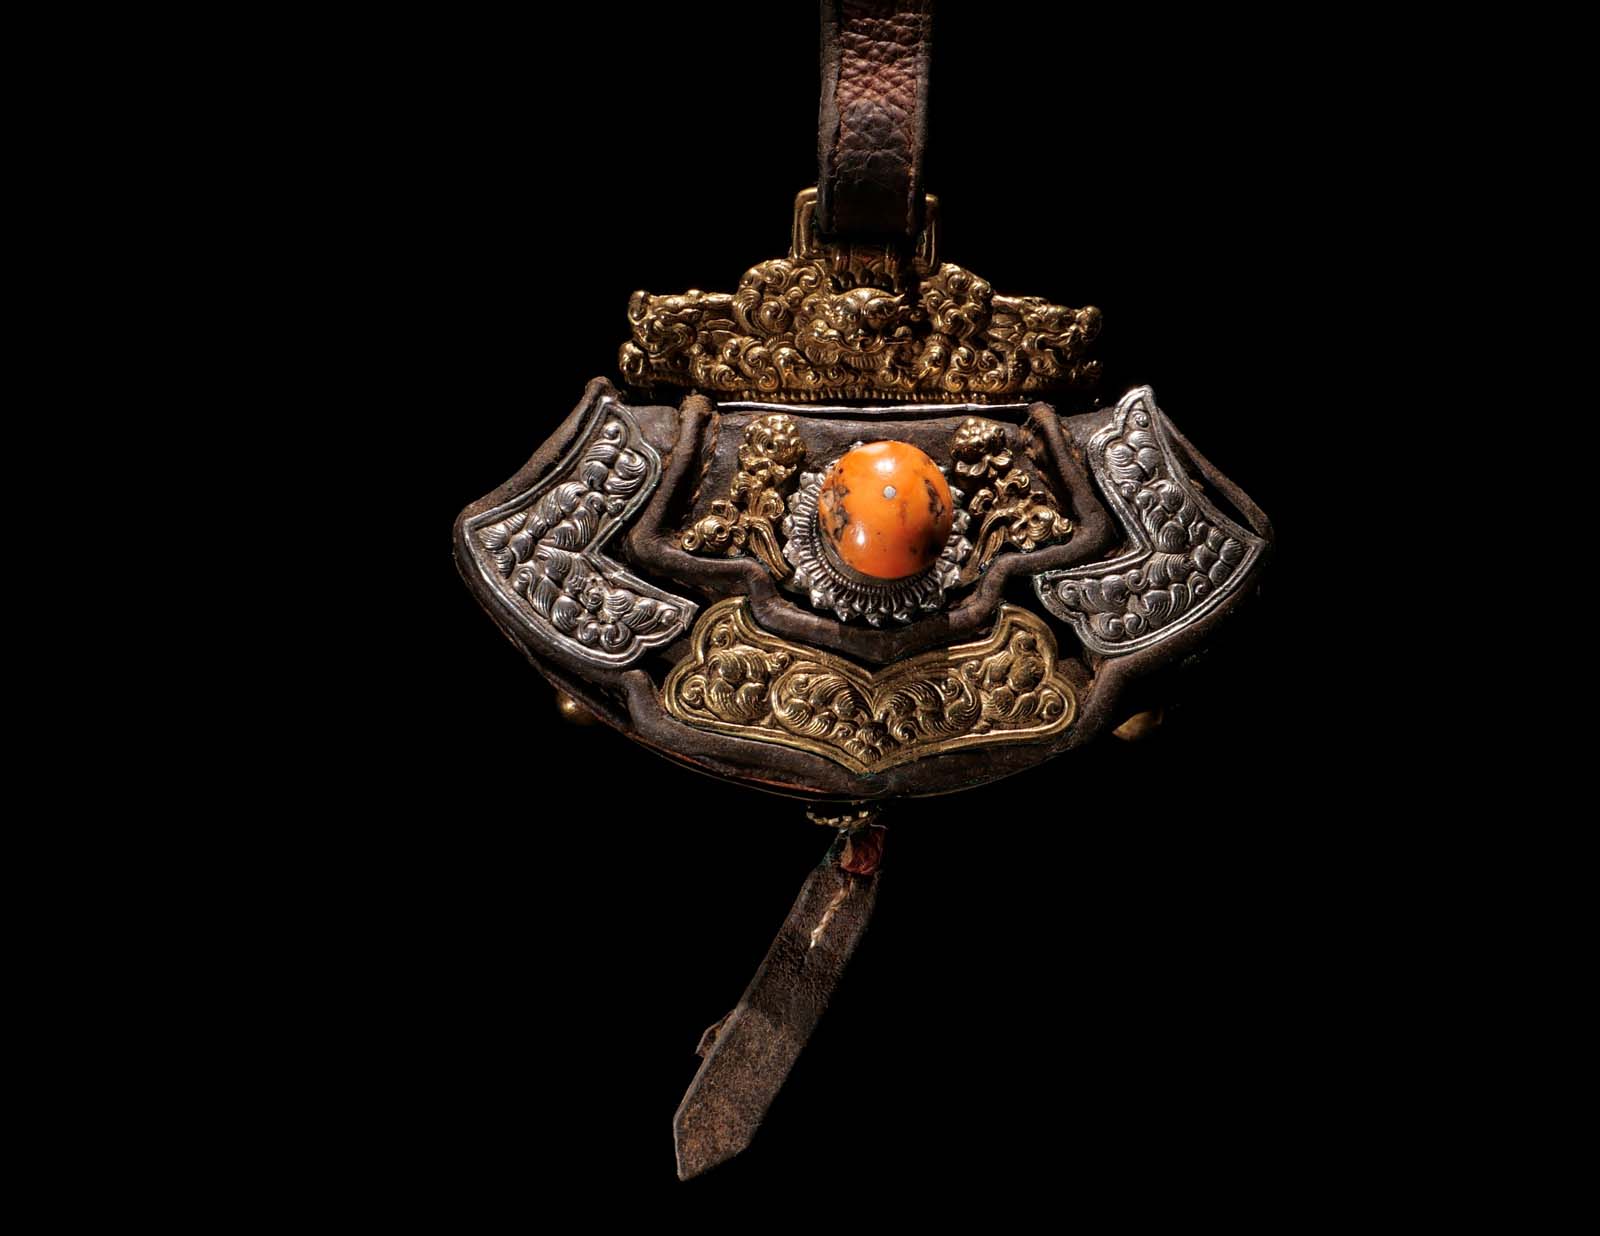 Börse, am Gürtel getragen Koralle, Silber, Bronze, Leder. Frühes 20. Jhdt. Zentral-Tibet. B 13 cm. 600.- €